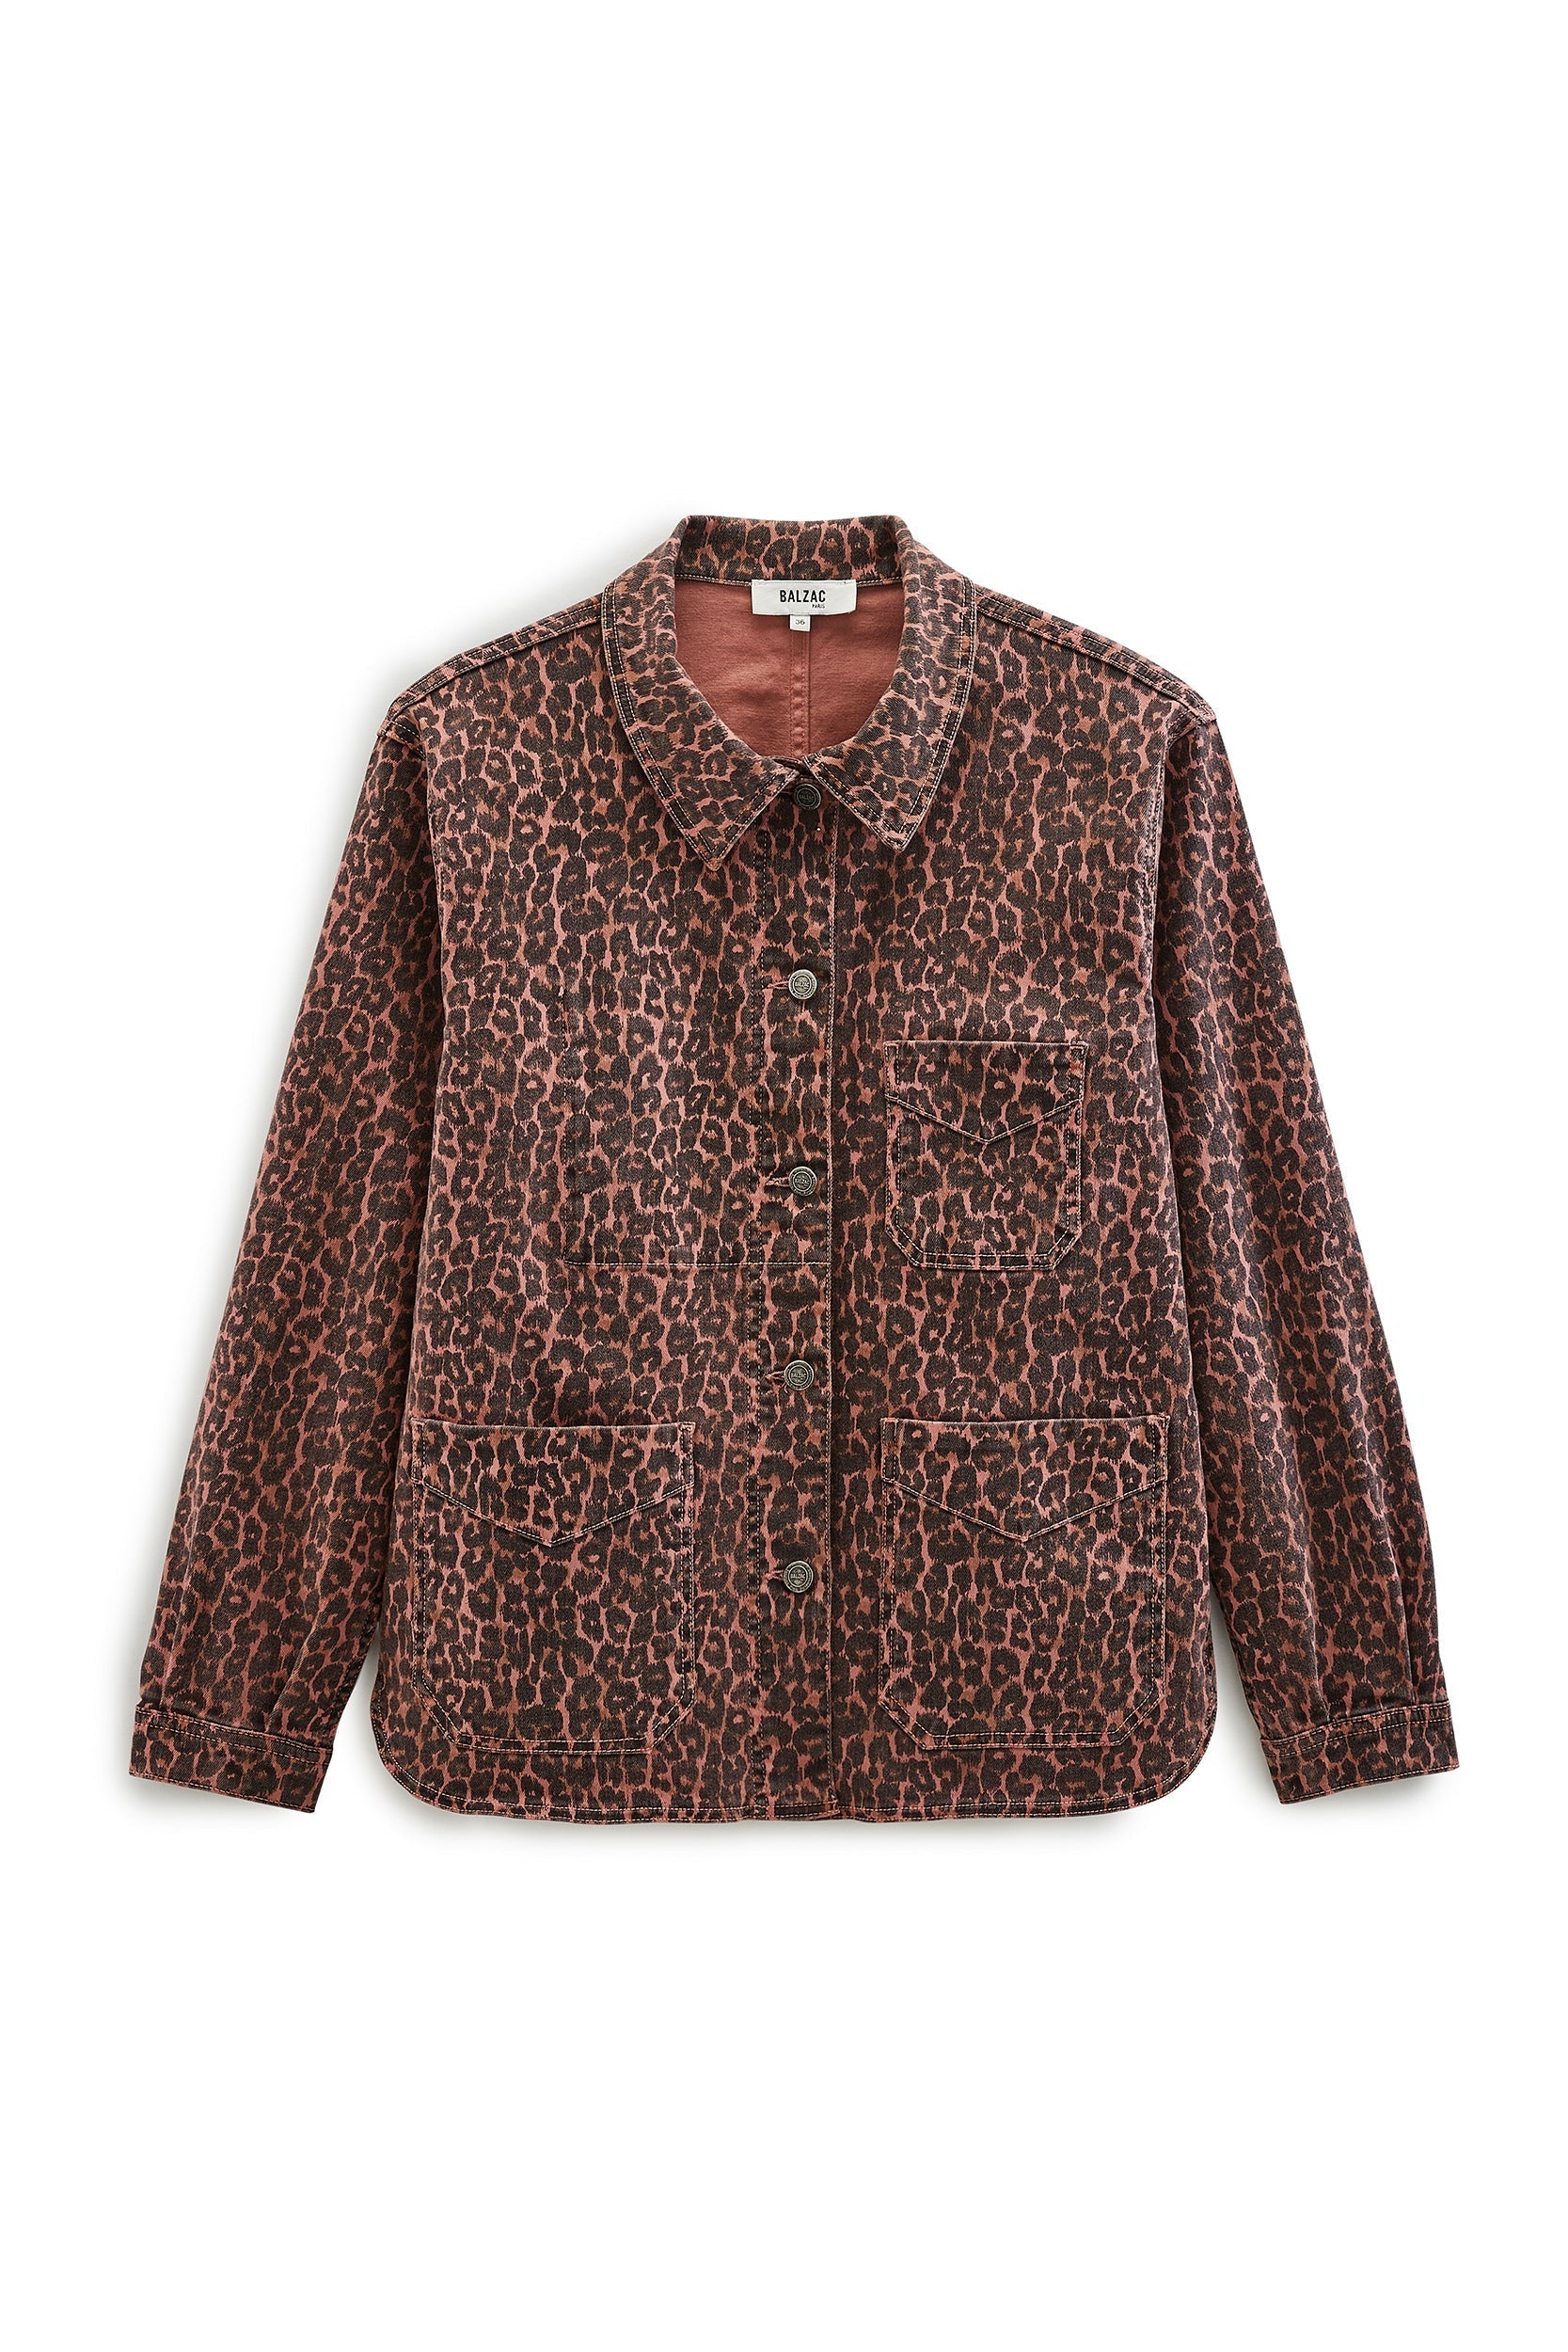 Coffee leopard Marais jacket - Balzac Paris